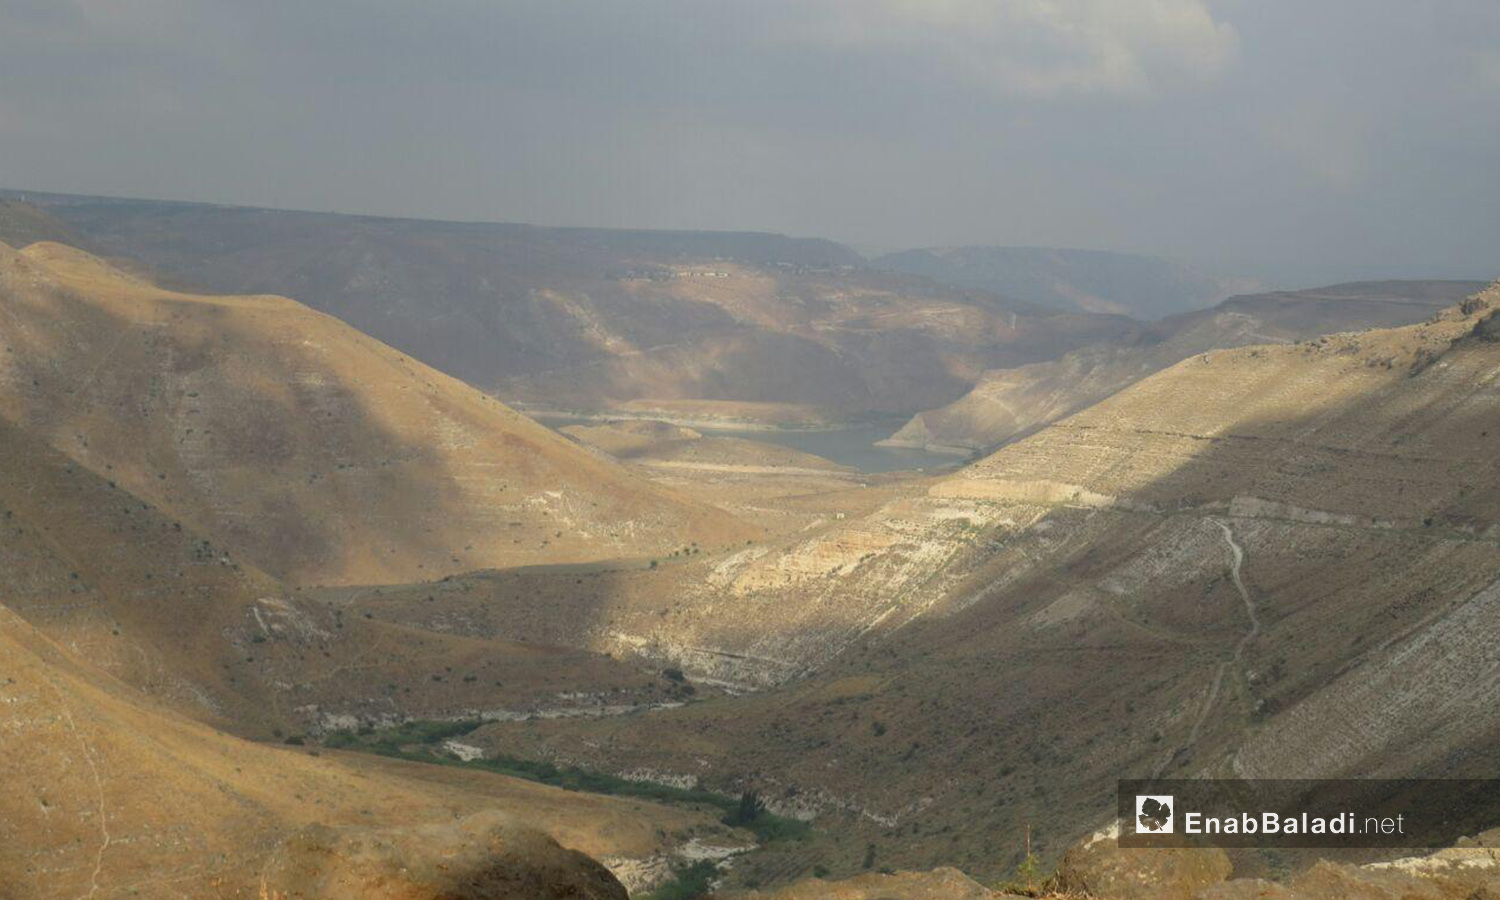 The Yarmouk Valley in western Daraa countryside – 07 August 2020 (Enab Baladi / Halim Mohammad)